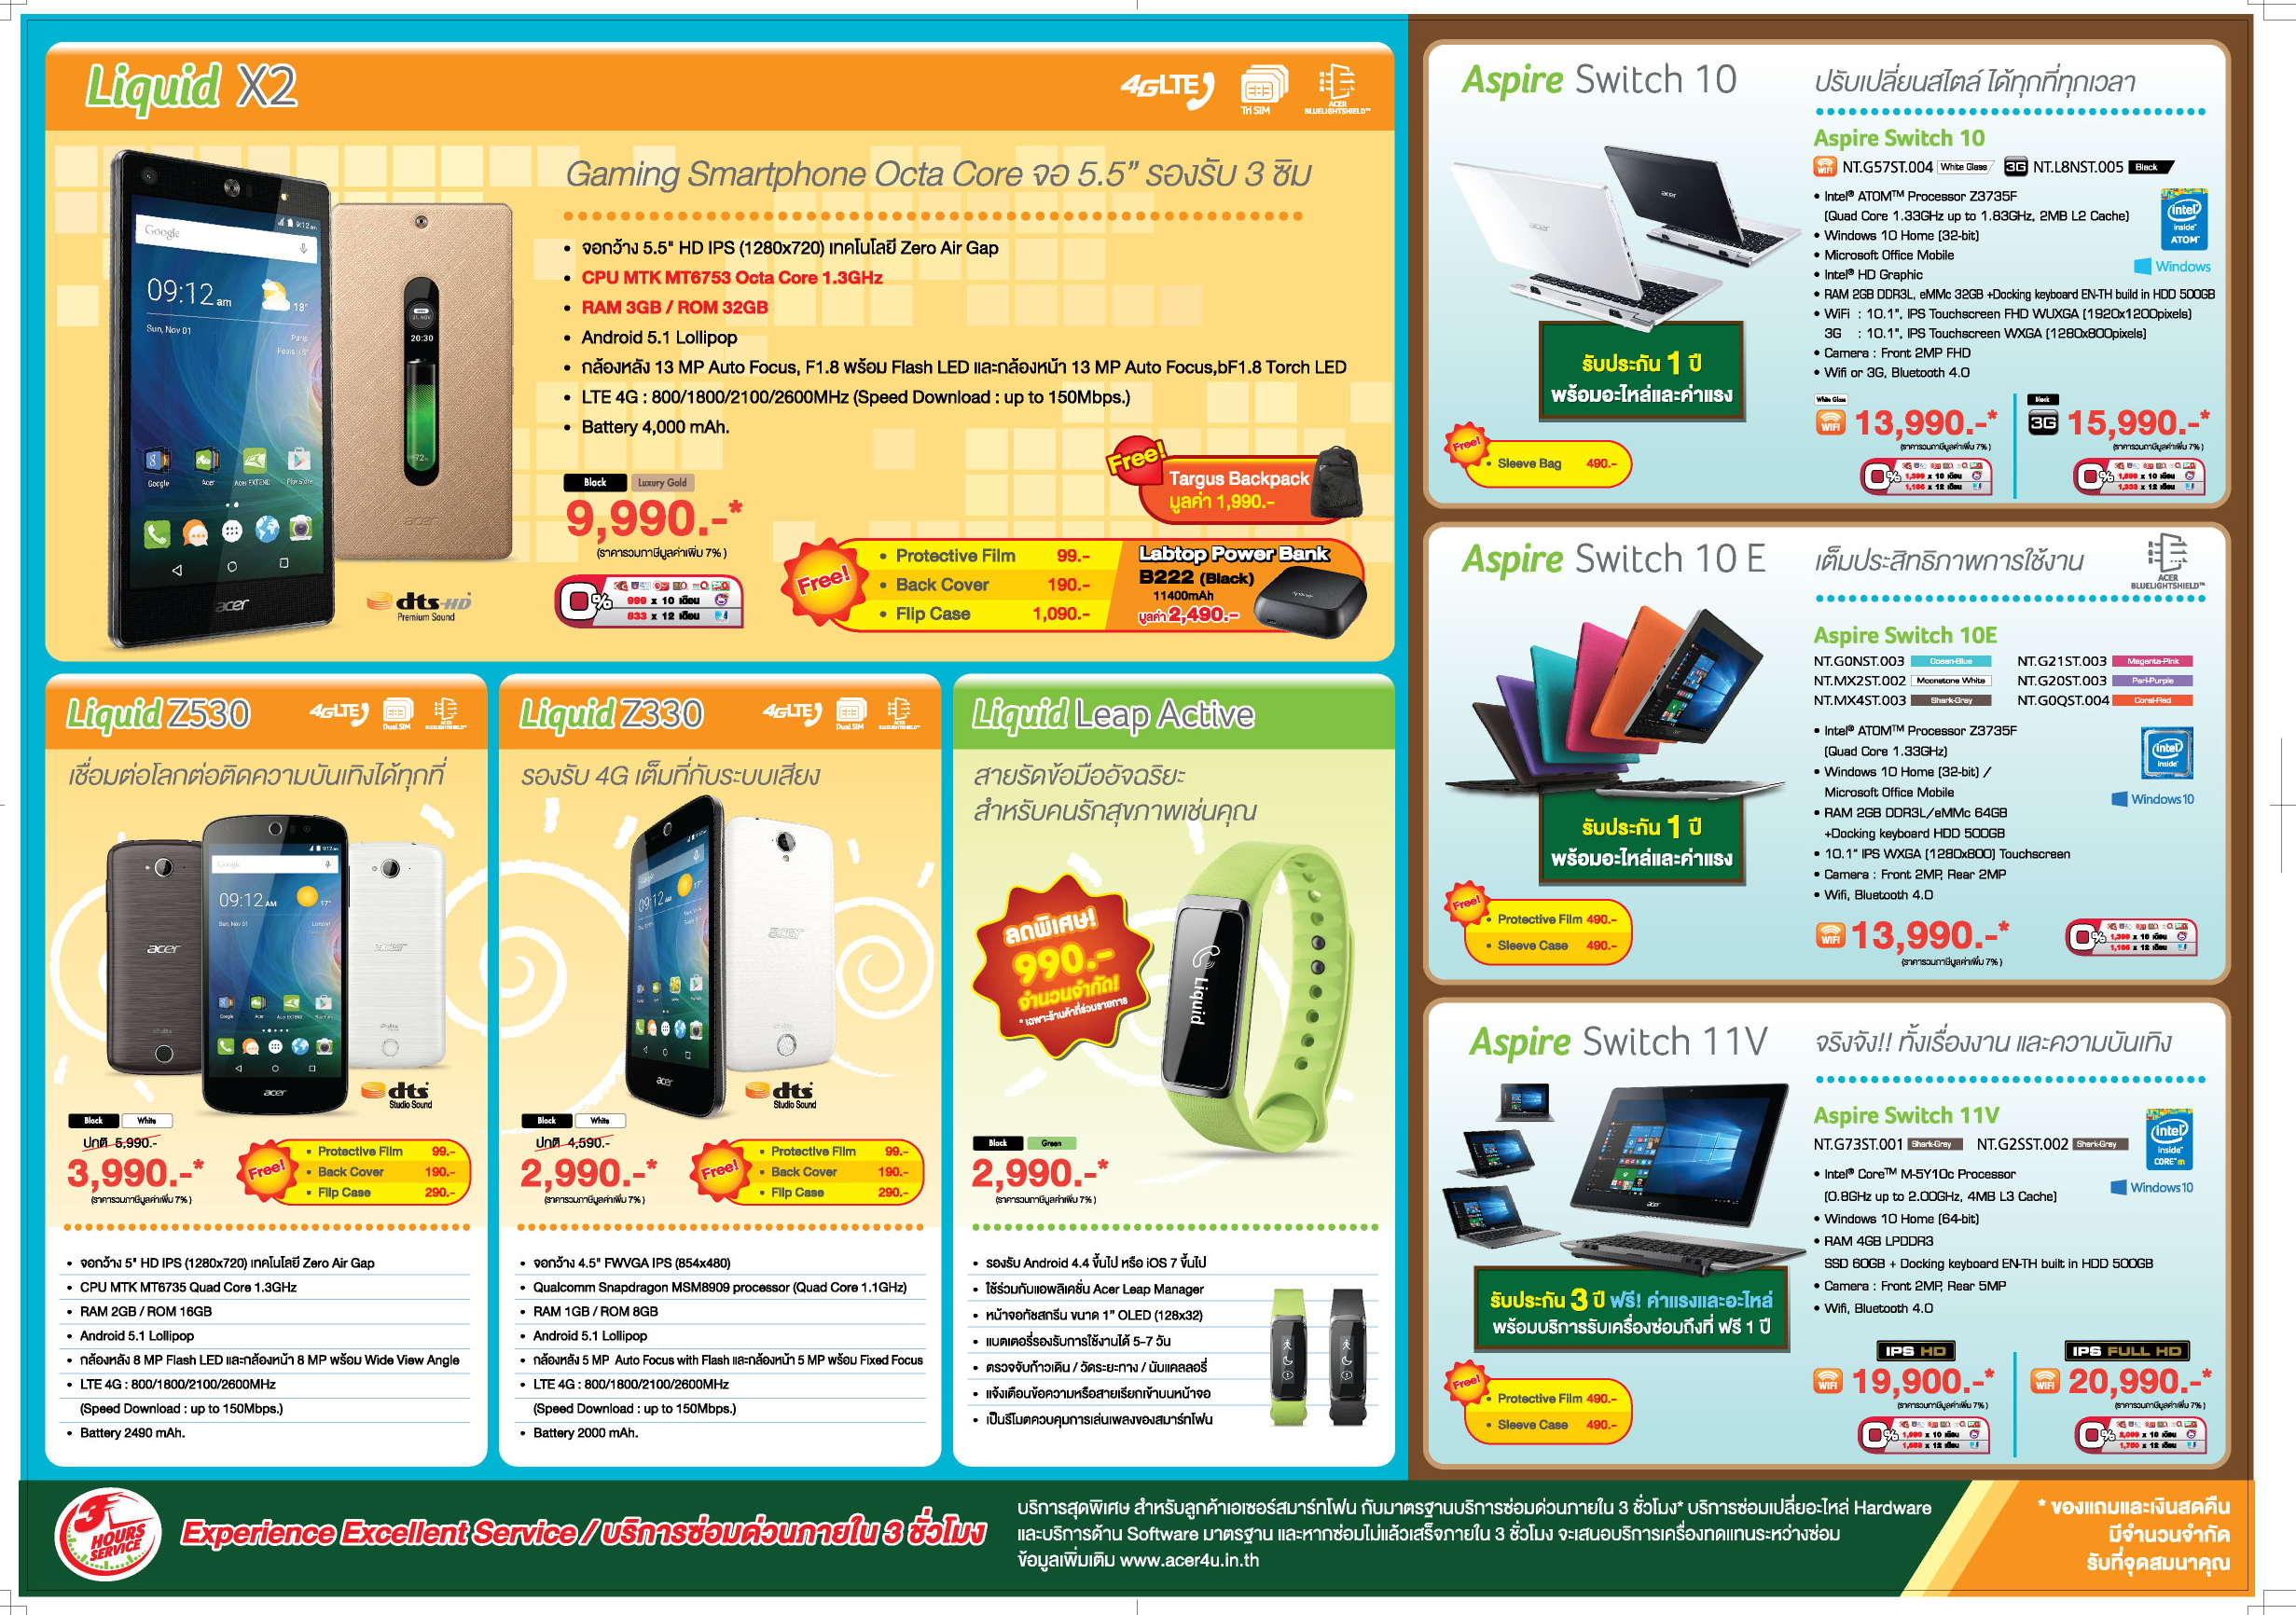 [TME 2016] รวมมือถือ Acer สเปคสุดคุ้ม น่าซื้อในงาน Thailand Mobile Expo 2016 Hi-End